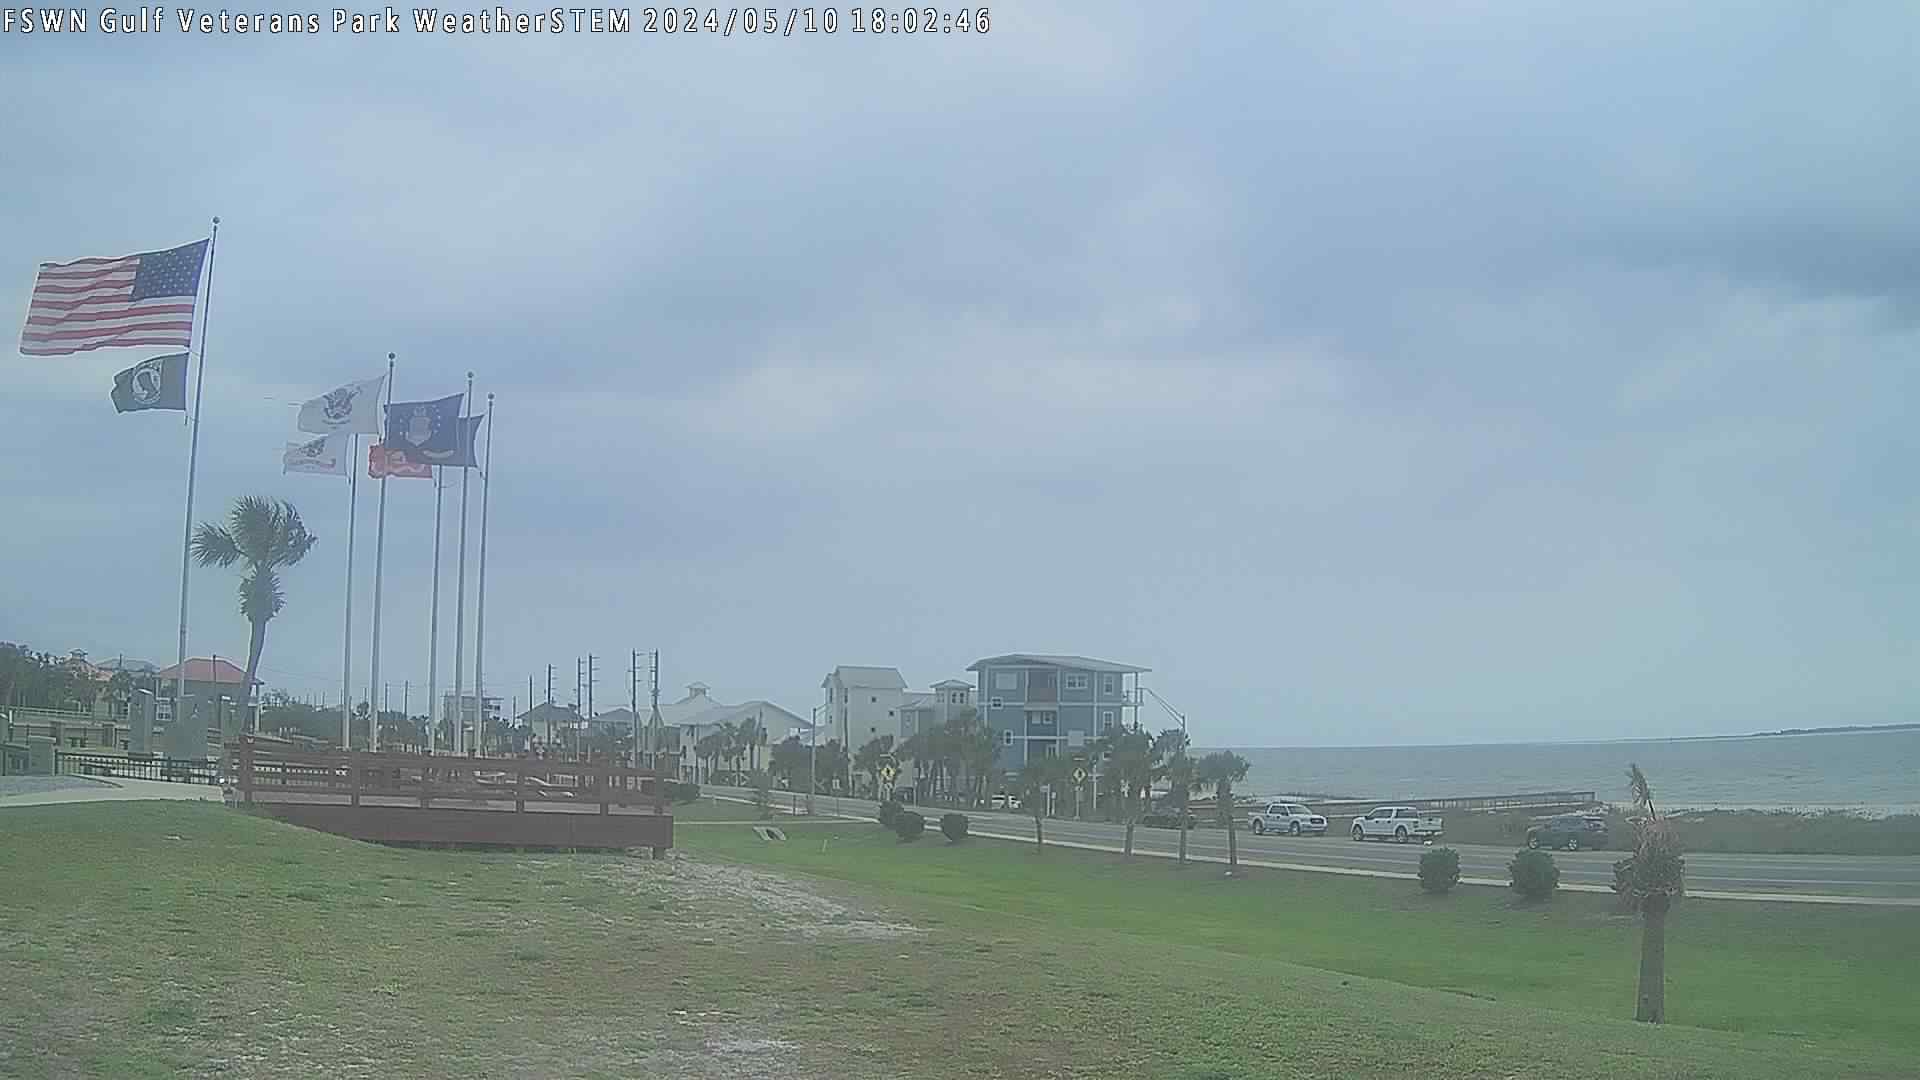  WeatherSTEM Memorial Camera FSWNBeaconHill in Gulf County, Florida FL at 